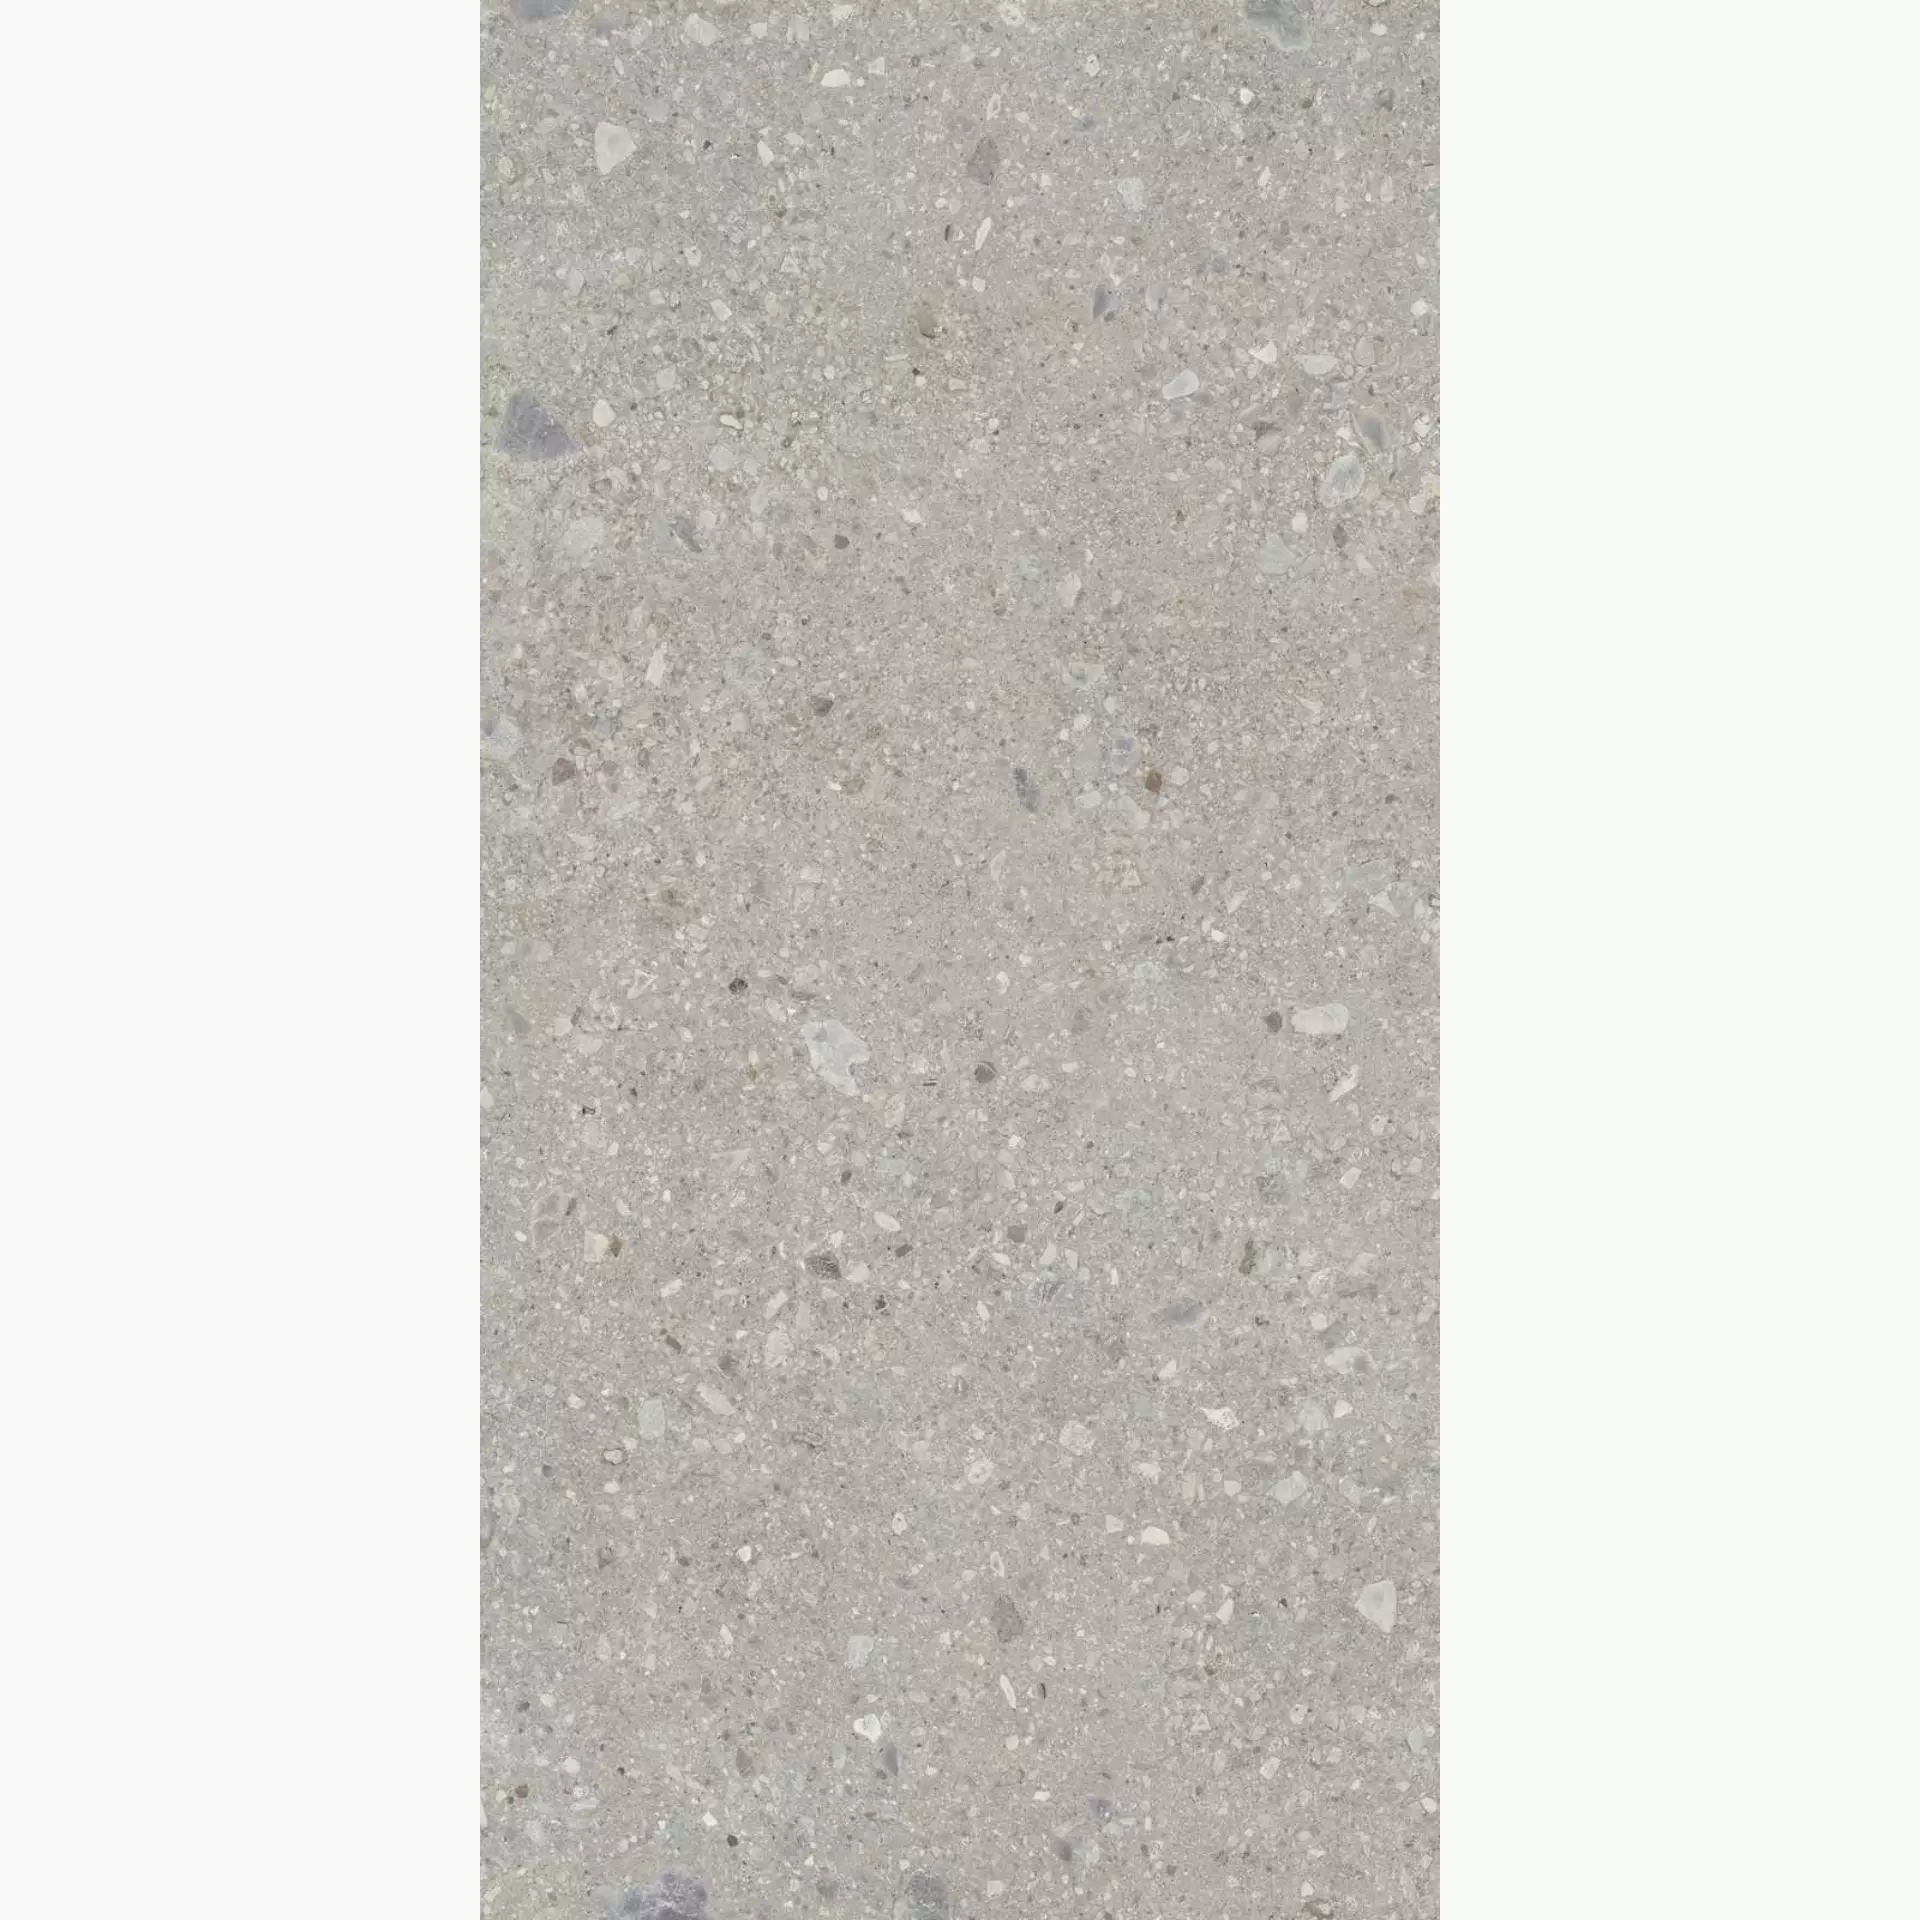 Marazzi Grande Stone Look Ceppo Di Gré Grey Naturale – Matt M10V 160x320cm rectified 6mm